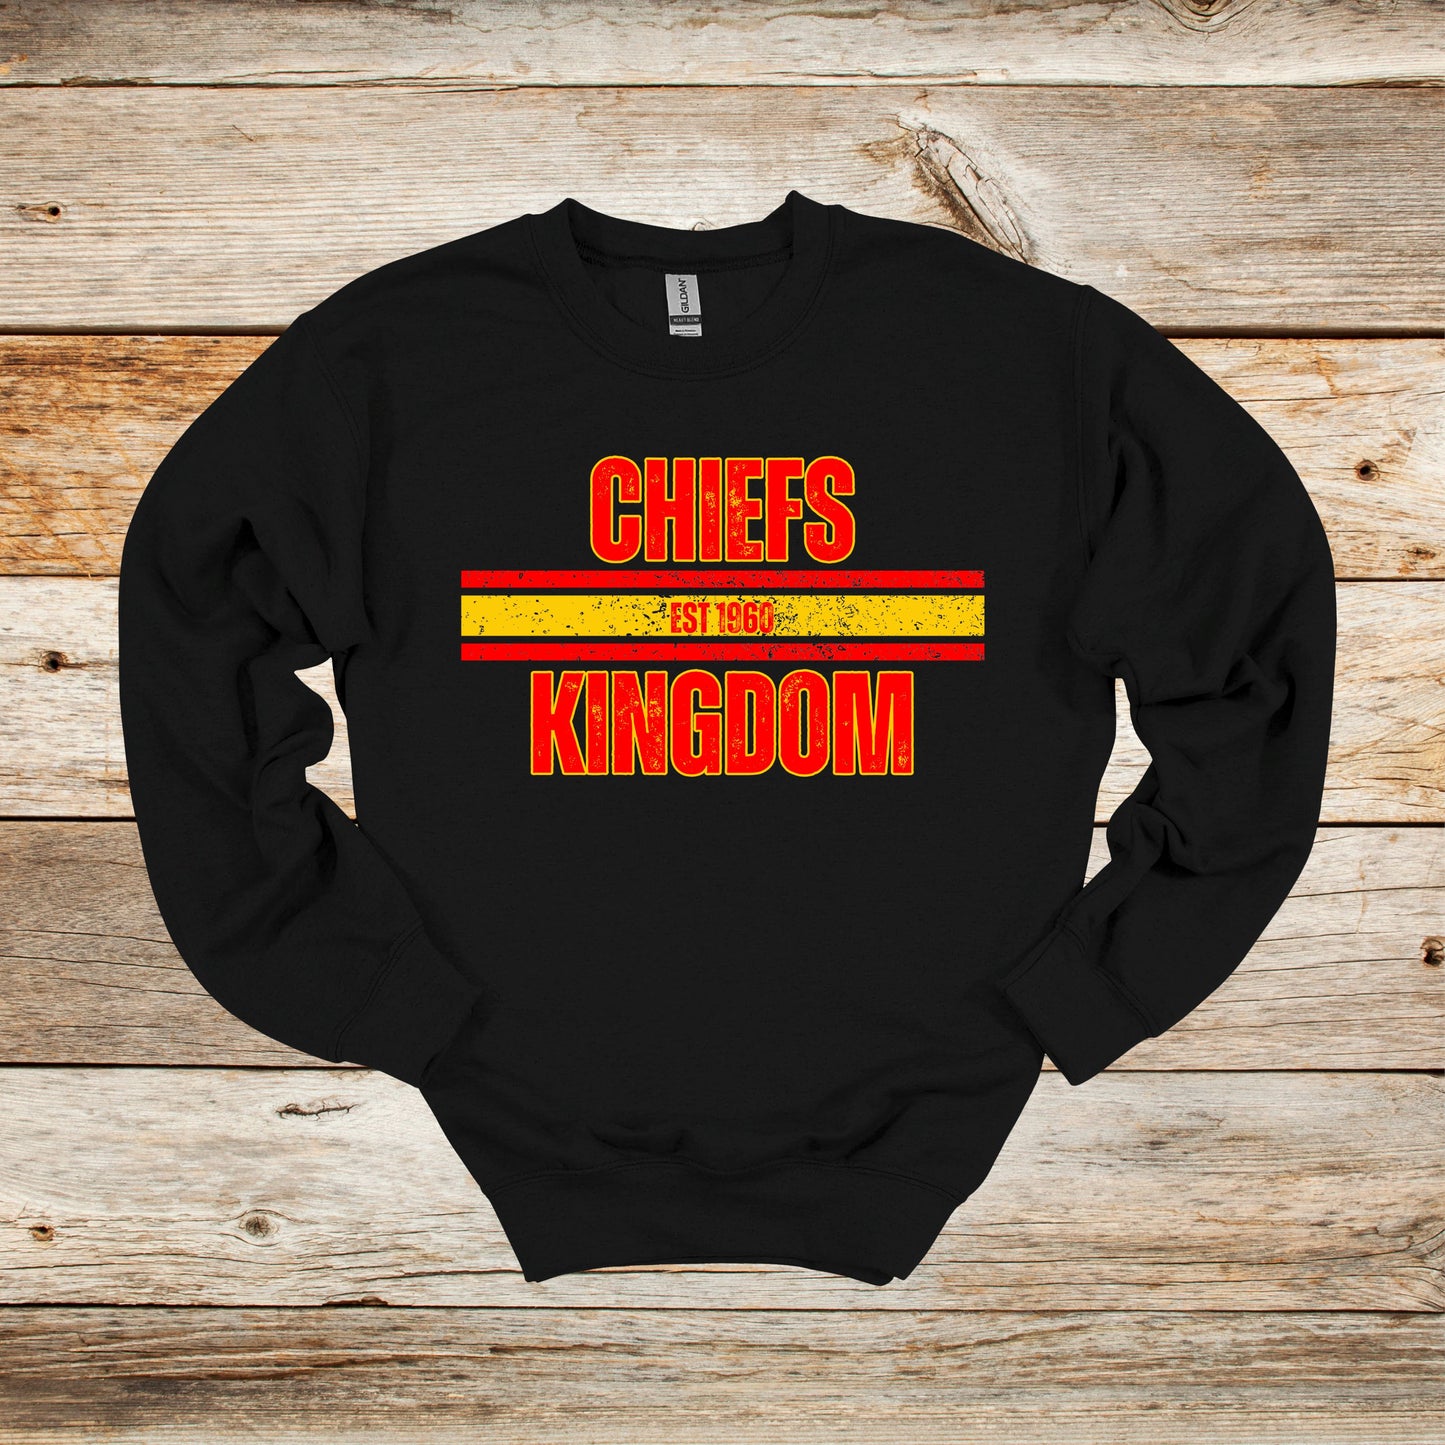 Football Crewneck and Hooded Sweatshirt - Chiefs Football - Chiefs Kingdom - Adult and Children's Tee Shirts - Sports Hooded Sweatshirt Graphic Avenue Crewneck Sweatshirt Black Adult Small